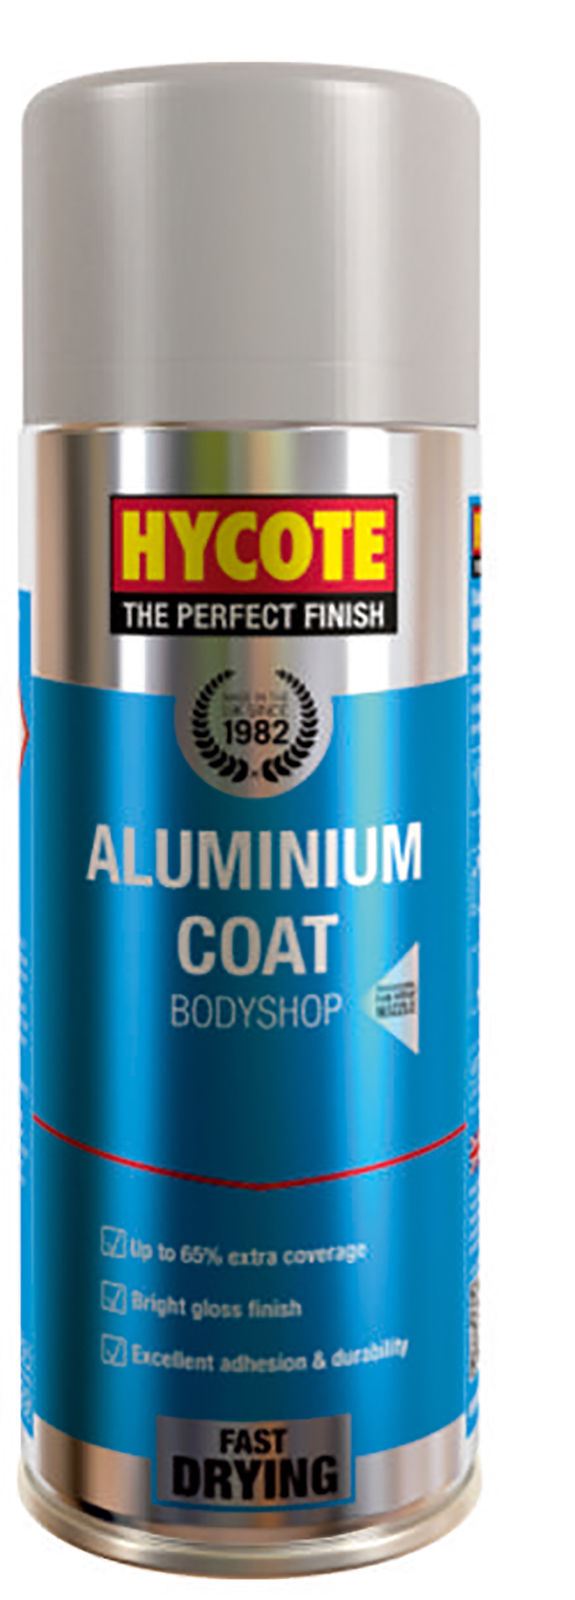 Hycote Bodyshop Aluminium Coat Paint - 400ml